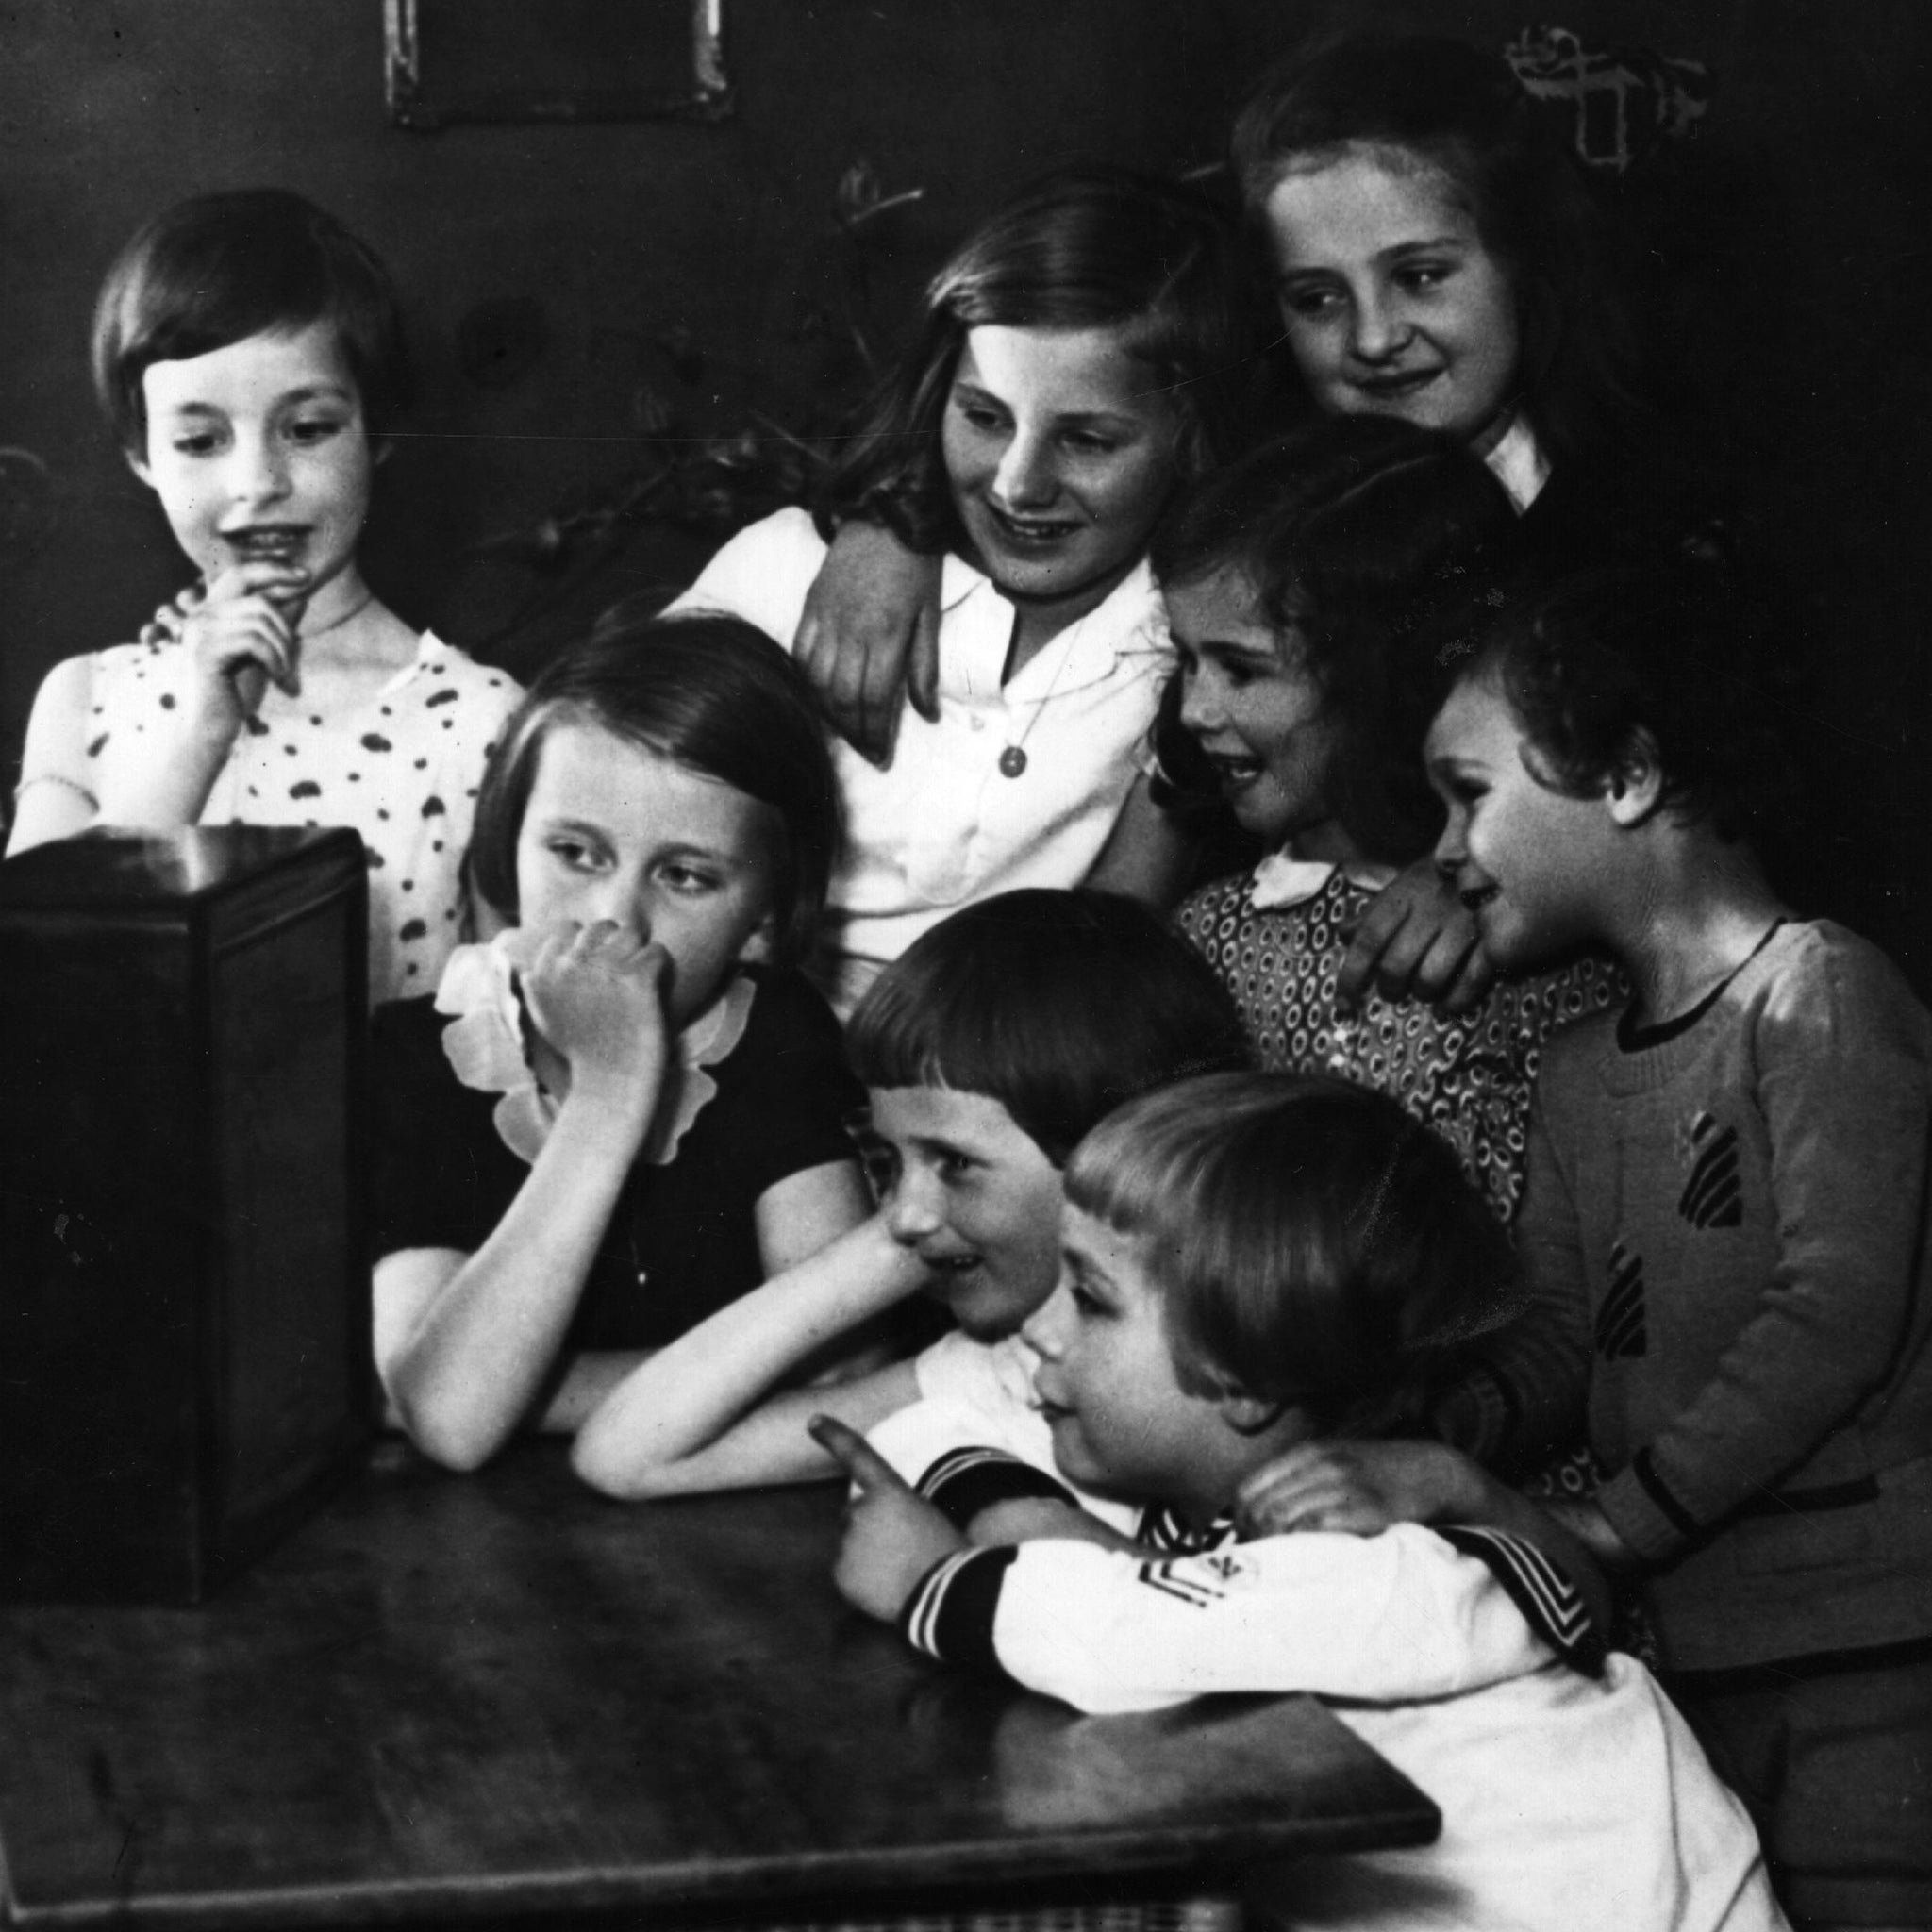 Circa 1946: Listening to the radio